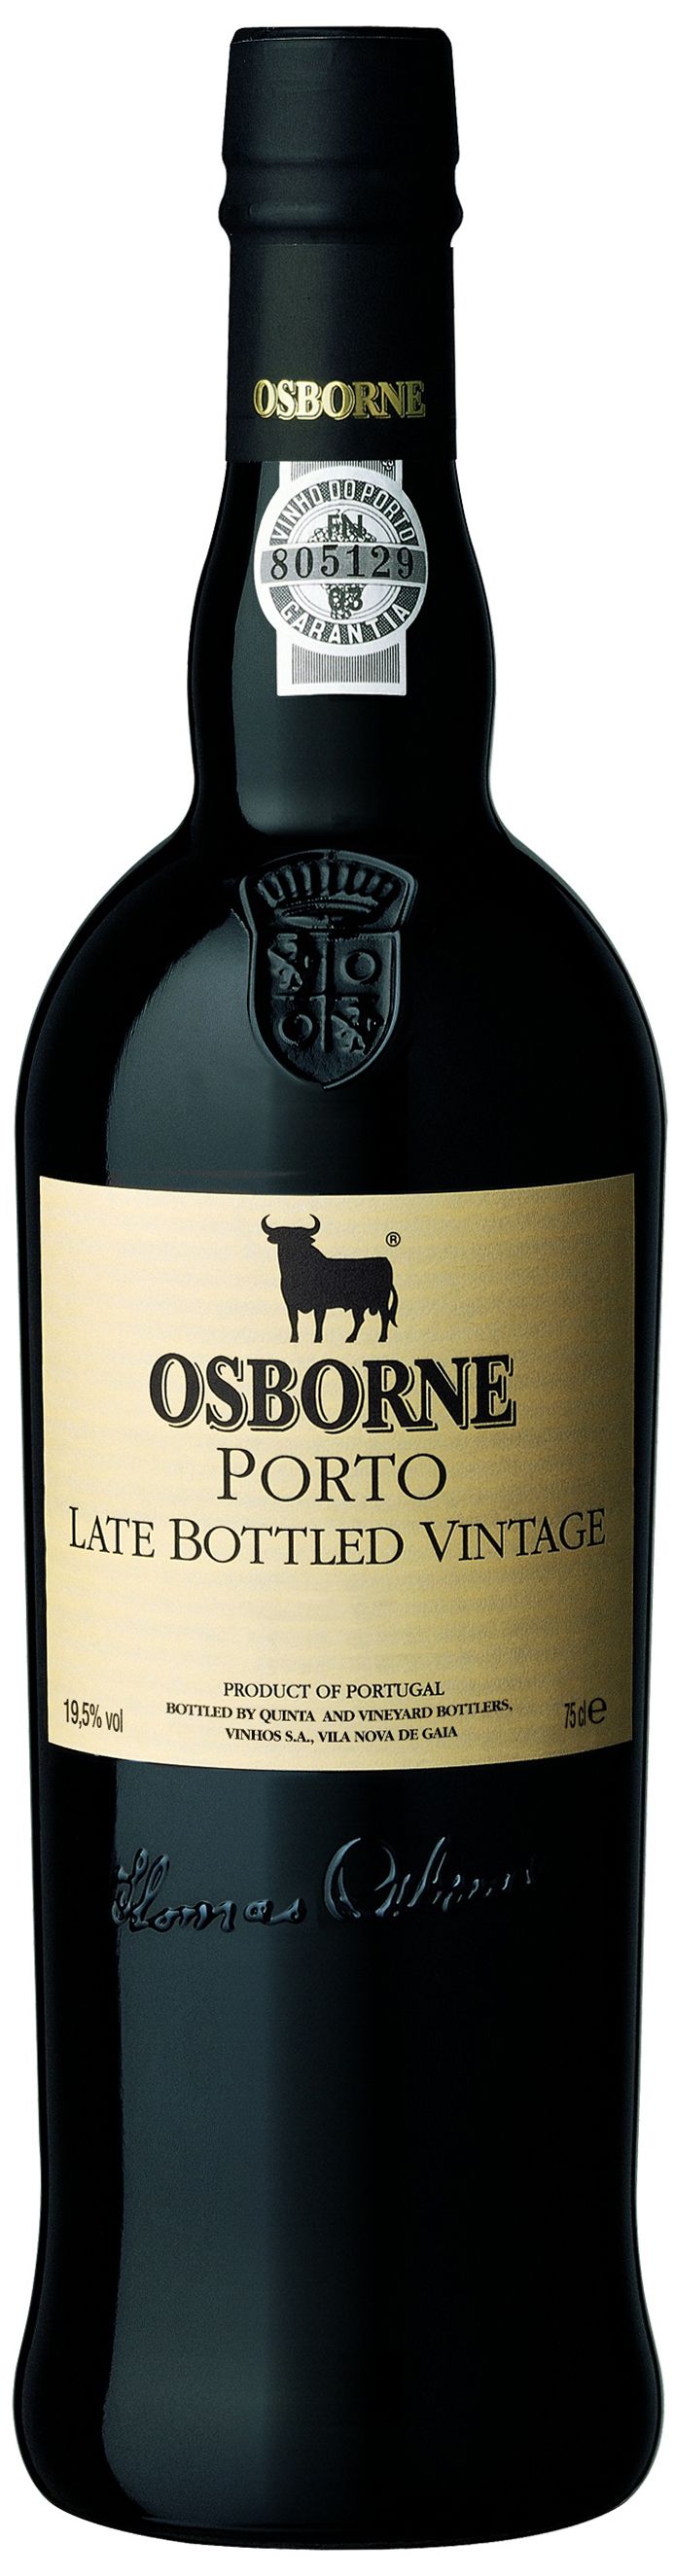 Quinta And Vineyard, Osborne Porto Late Bottled Vintage, 2004